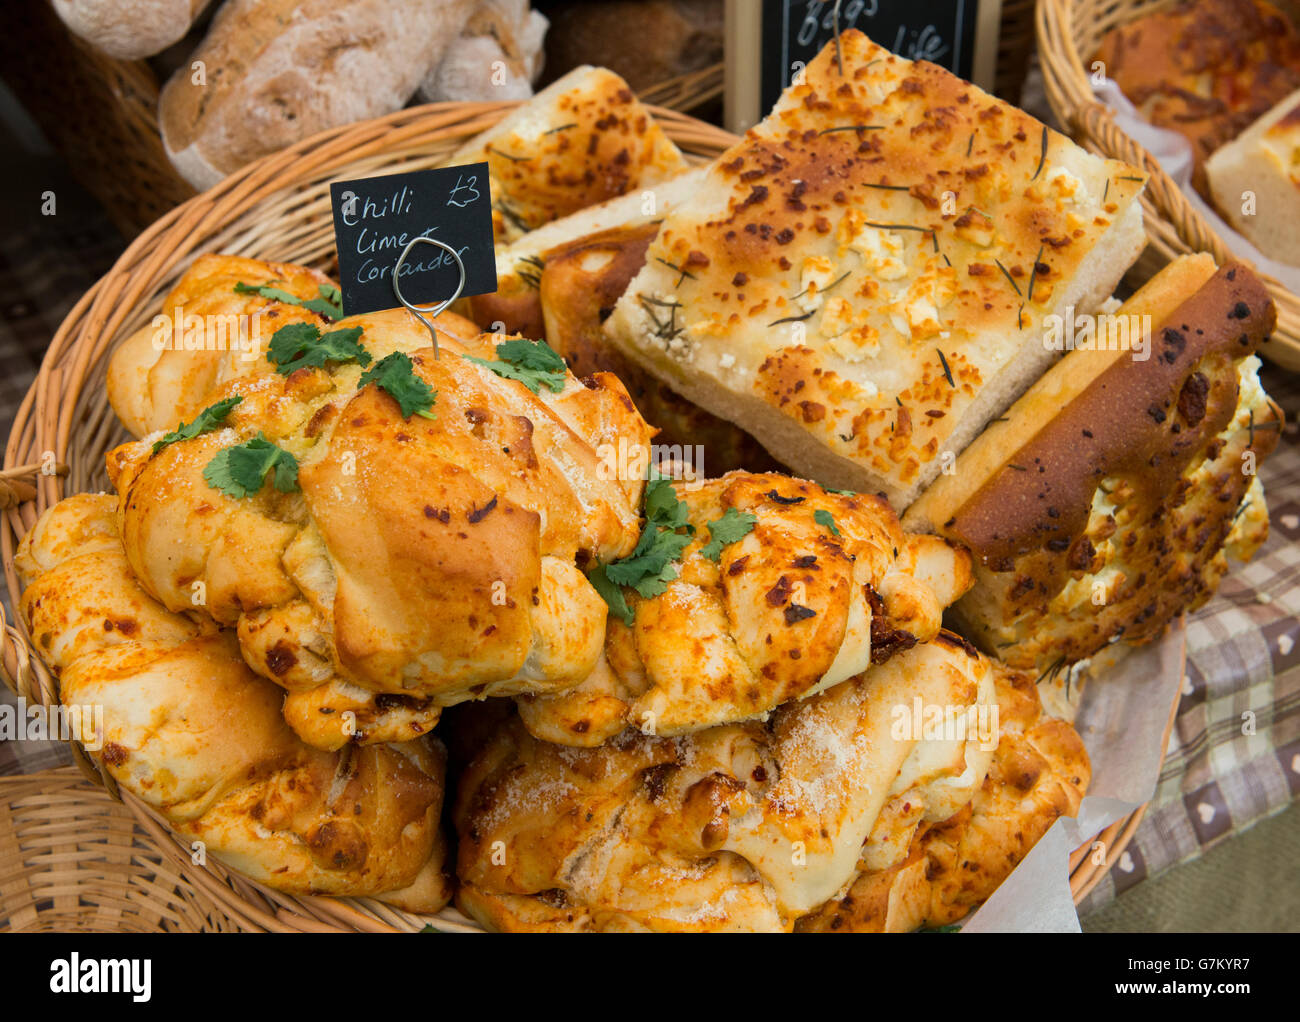 Swifts Bakery chilli, lime and coriander bread at the 2016 Shrewsbury Food Festival, Shropshire, England, UK. Stock Photo